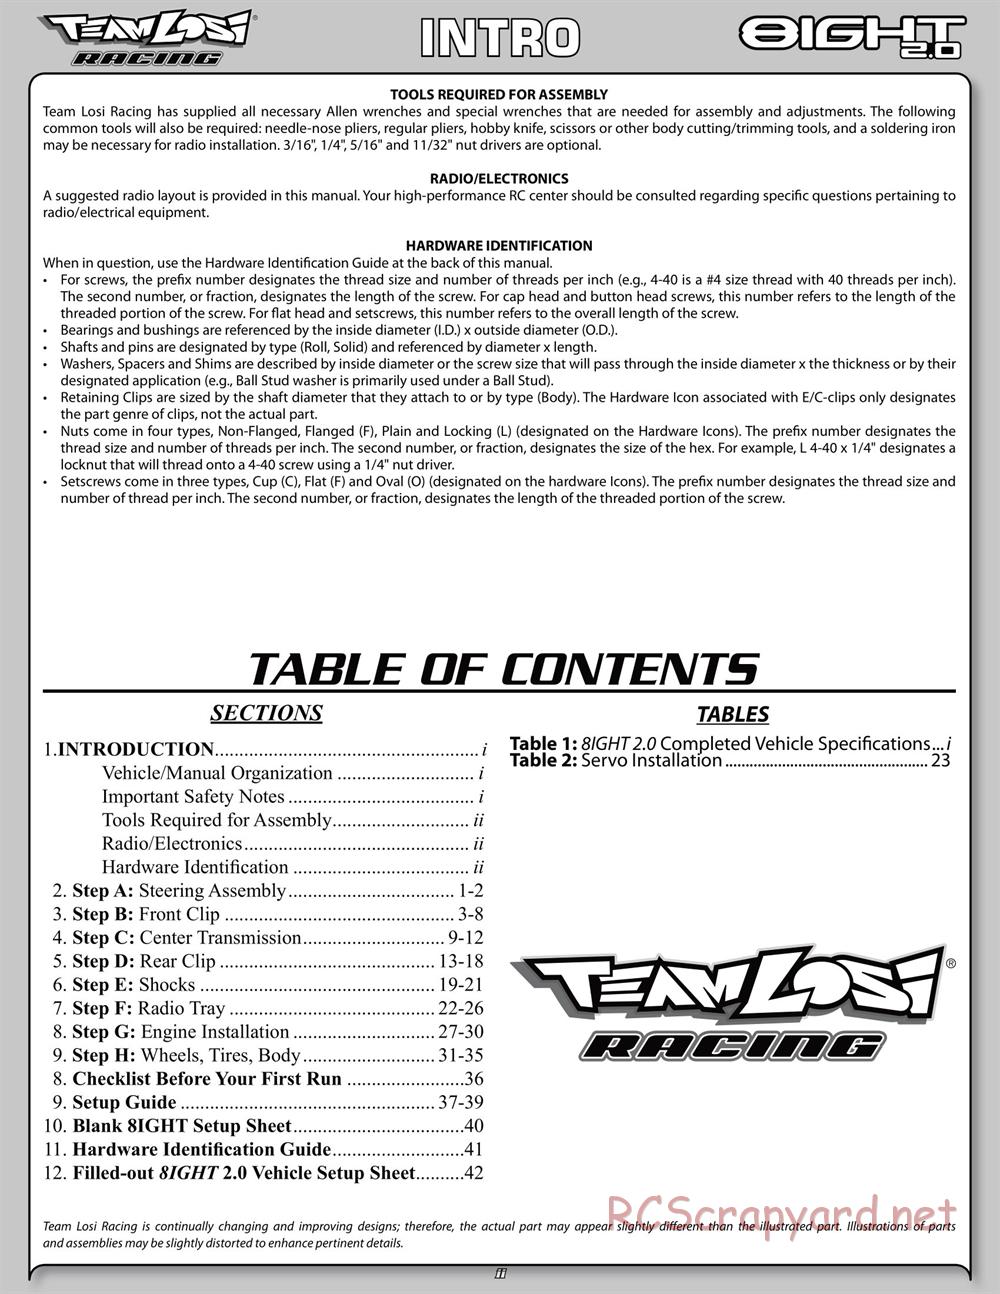 Team Losi - 8ight 2.0 - Manual - Page 7